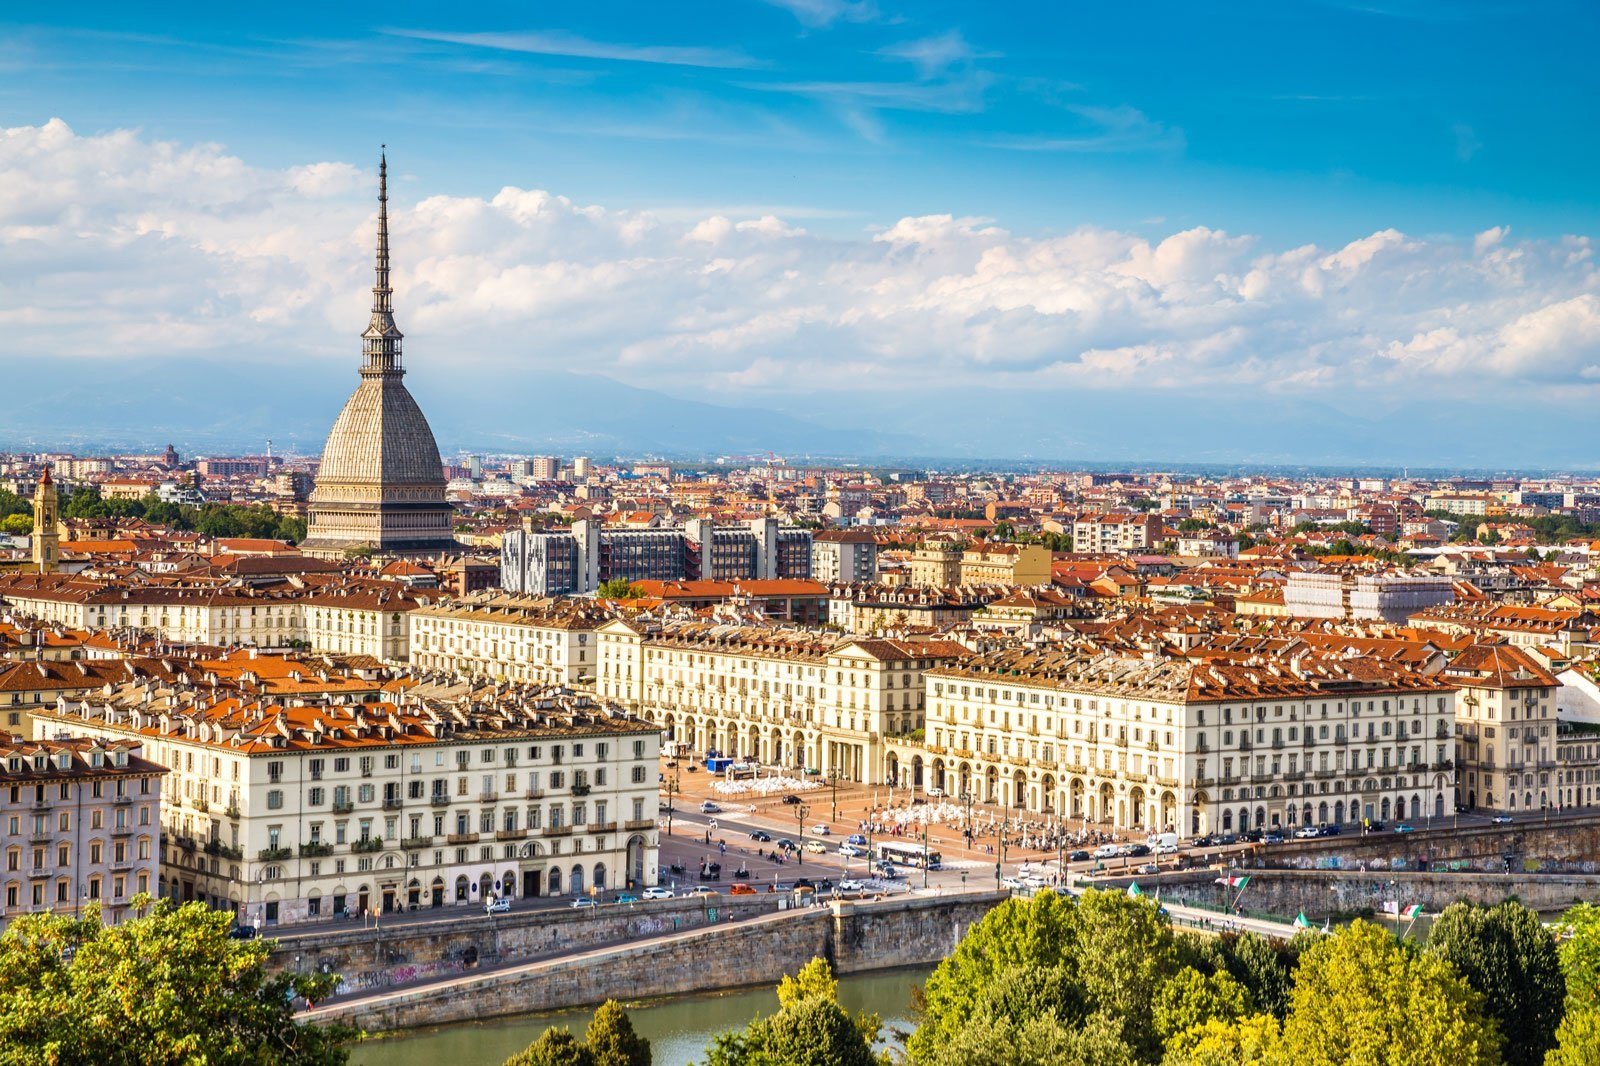 The skyline of Turin, with the distinctive Mole Antonelliana